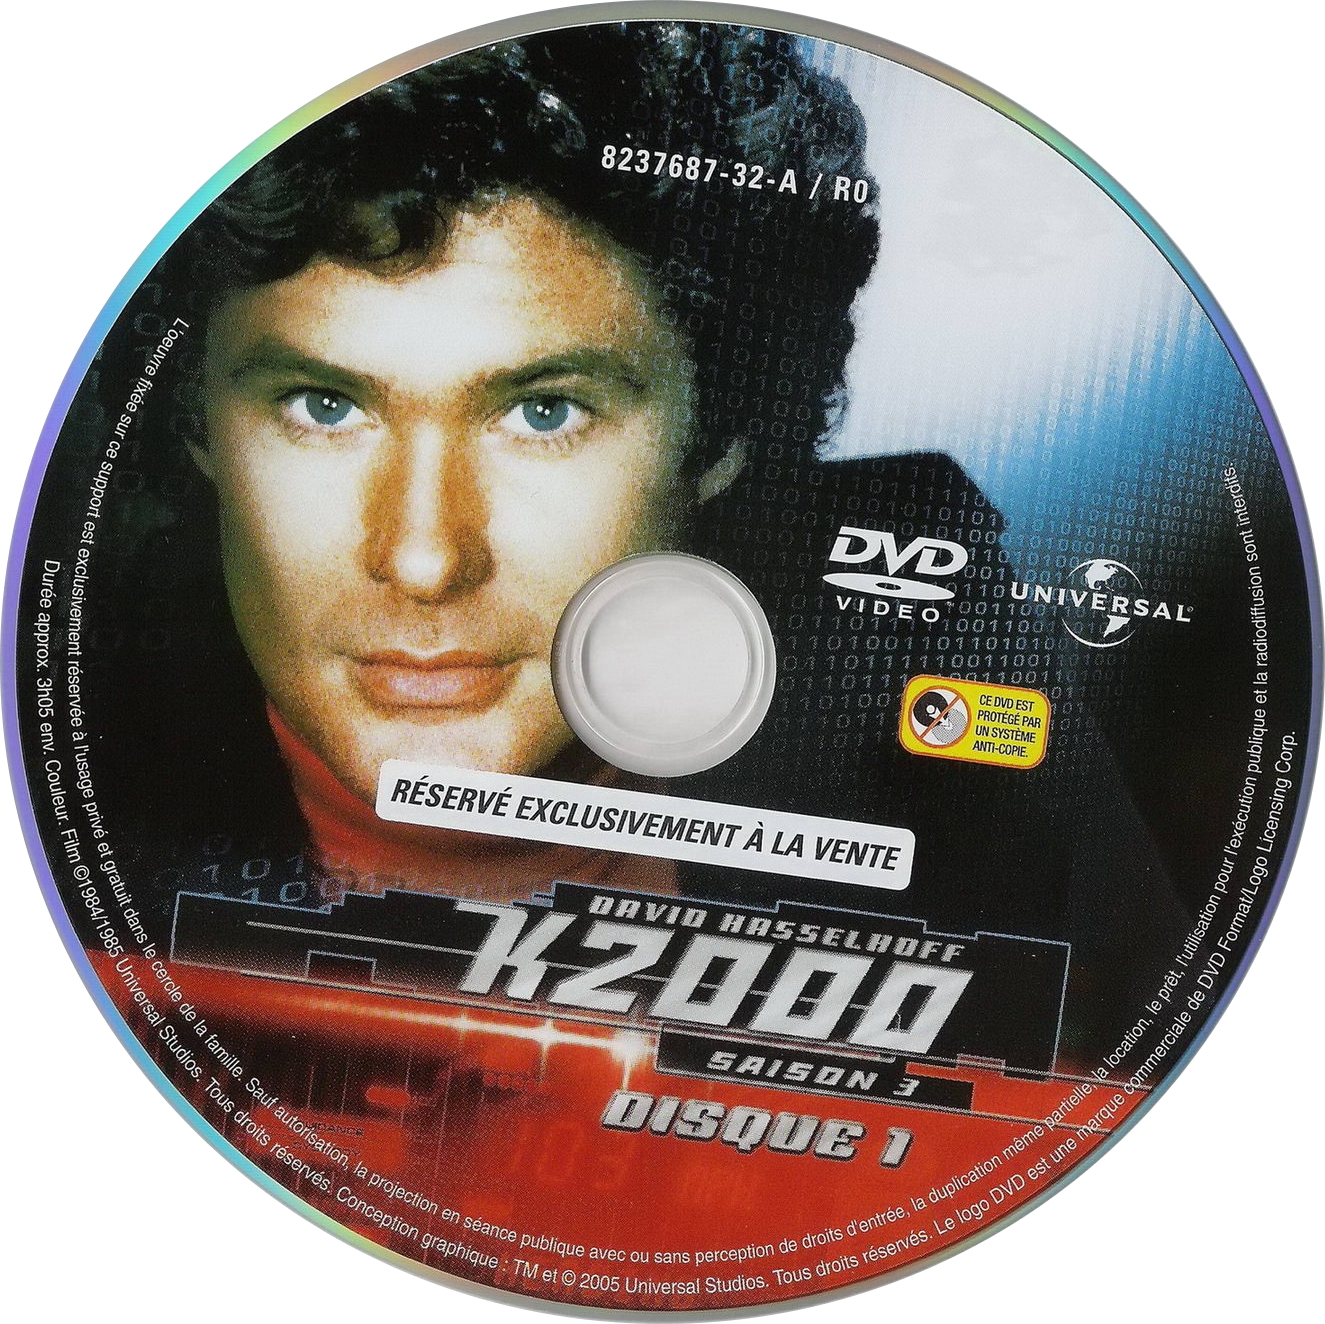 K2000 Saison 3 dvd 1